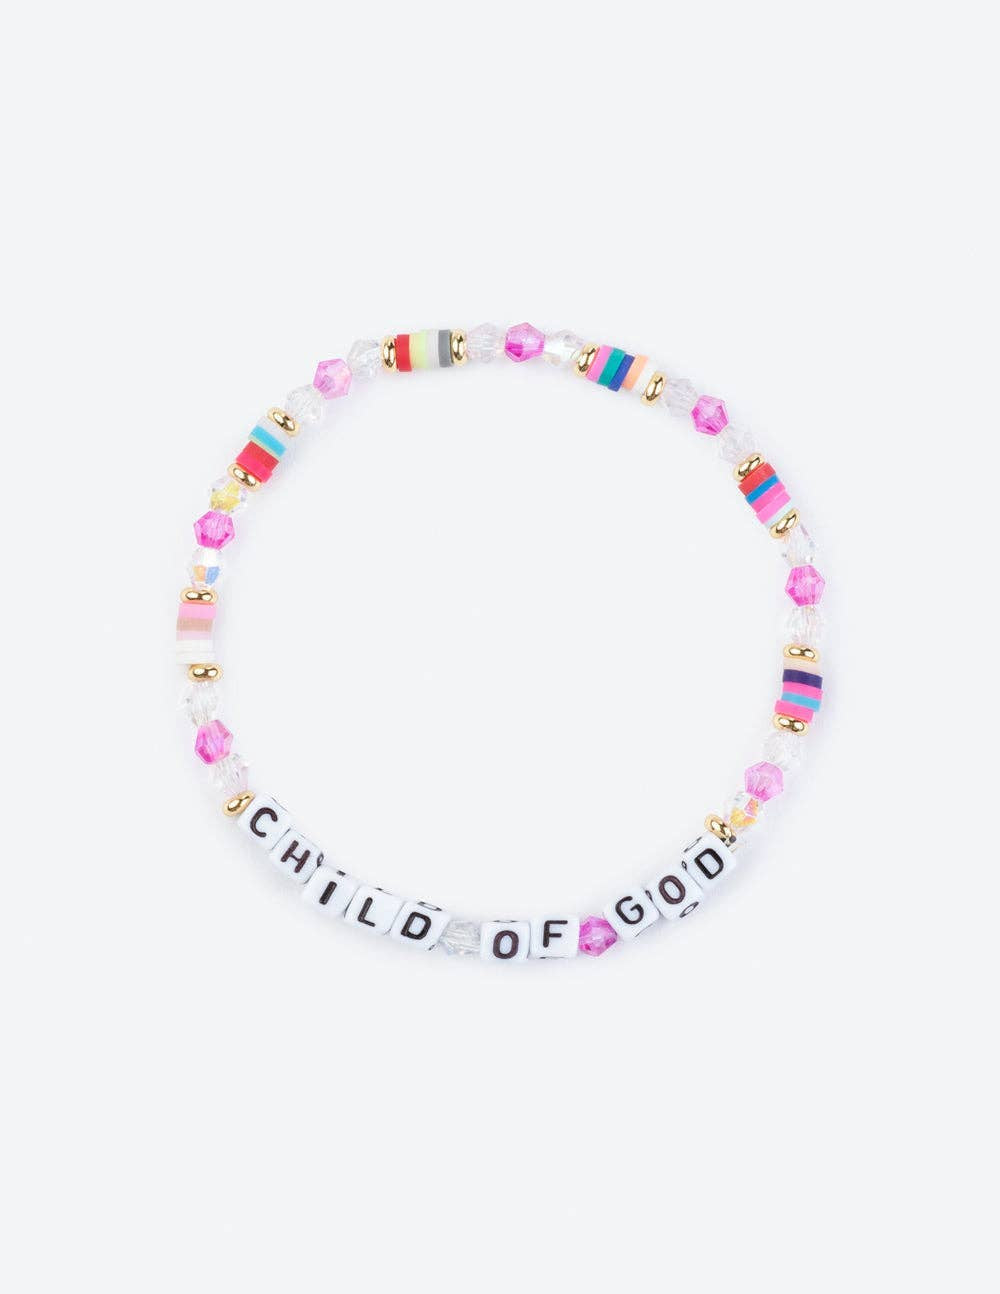 Child of God Letter Bracelet